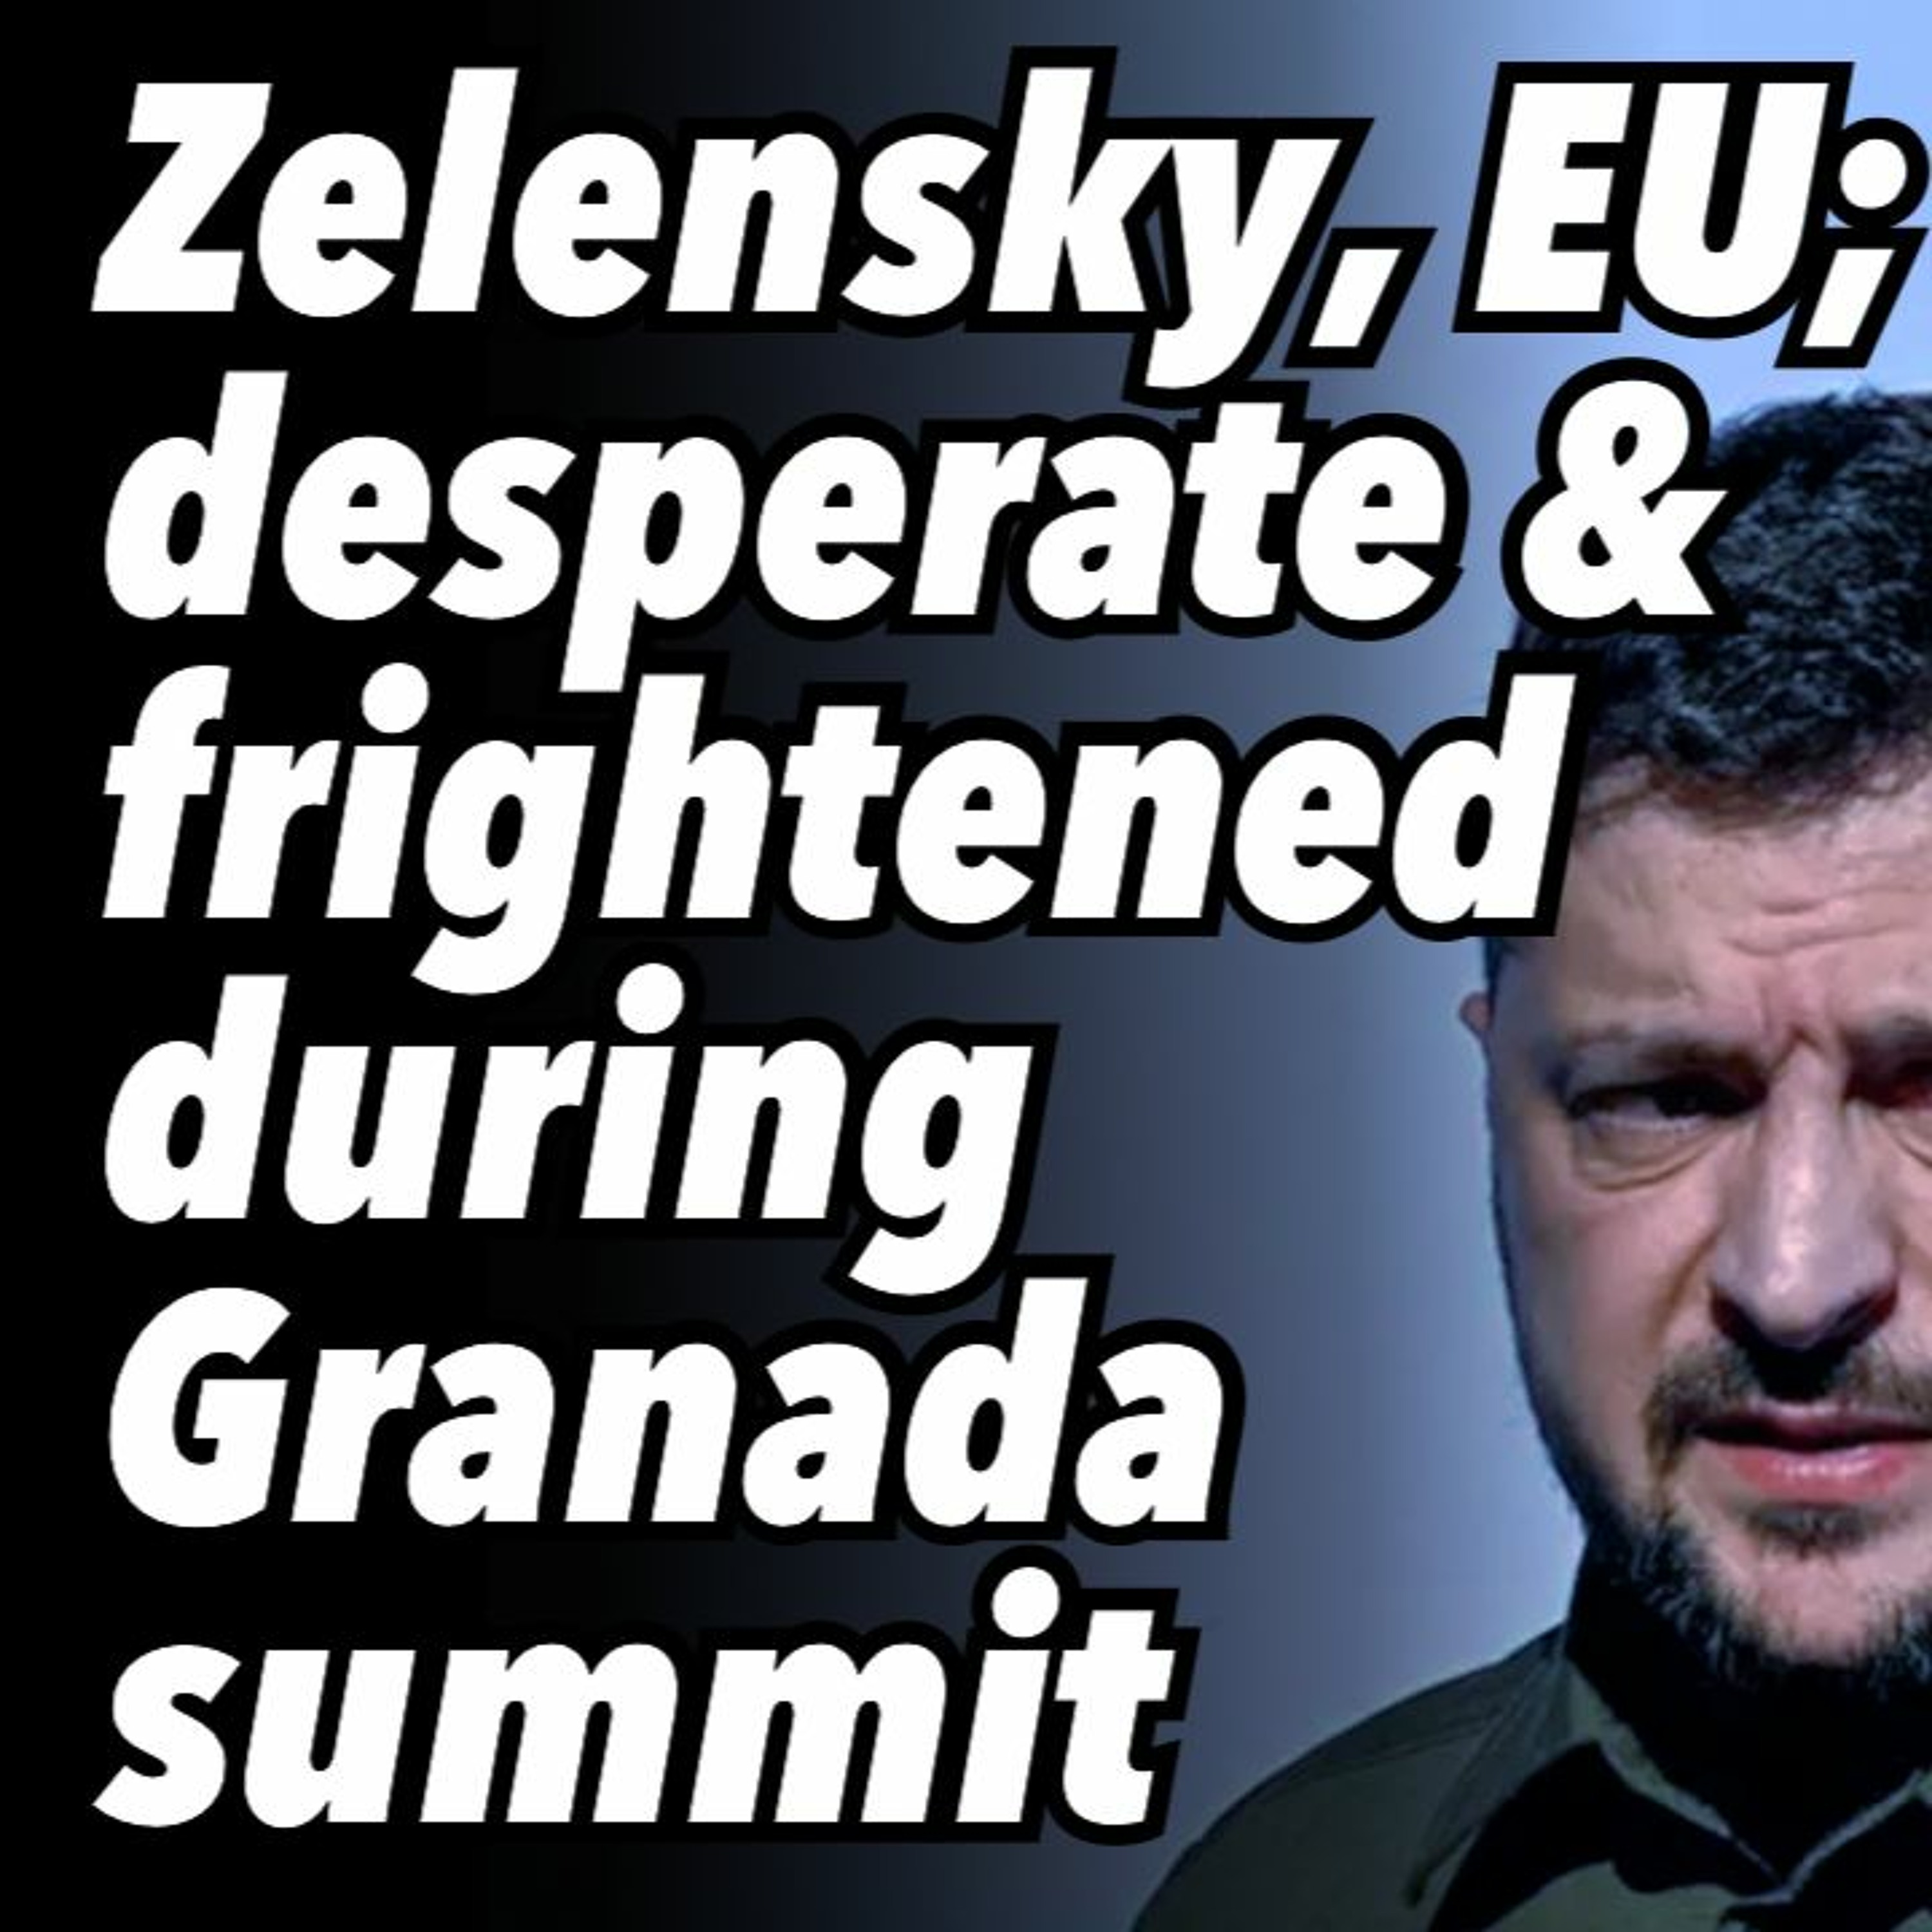 Zelensky, EU; desperate and frightened during Granada summit